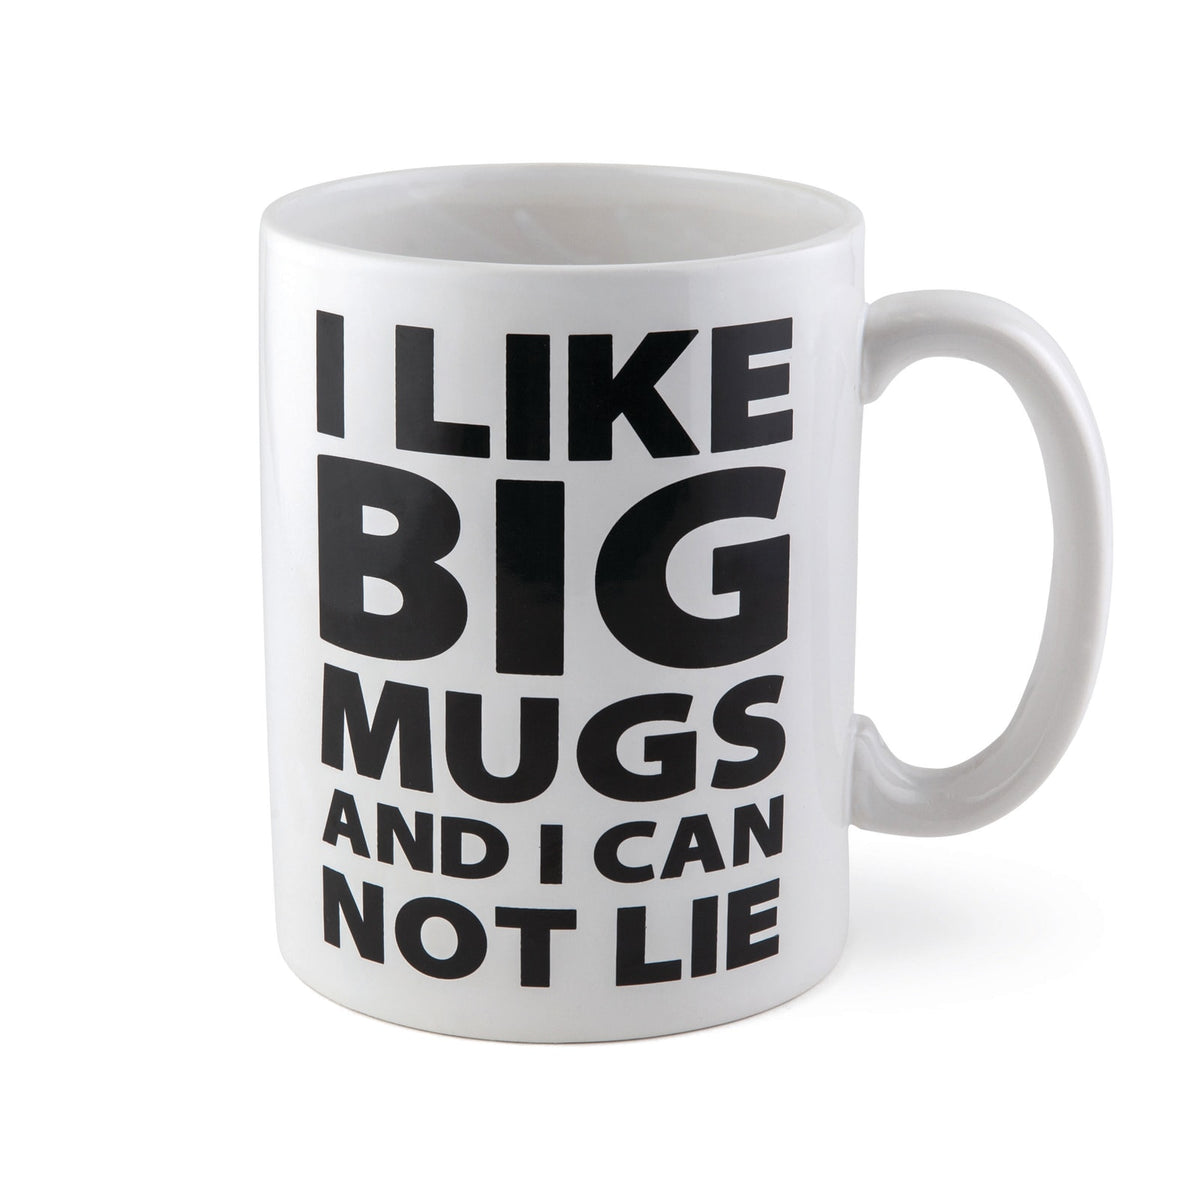  BigMouth Inc Gone Fishing Mug - Coffee Mugs for Men - Funny  Fishing Gifts - Novelty Gift for Fisherman, Dad, Husband - 20 Oz : Home &  Kitchen